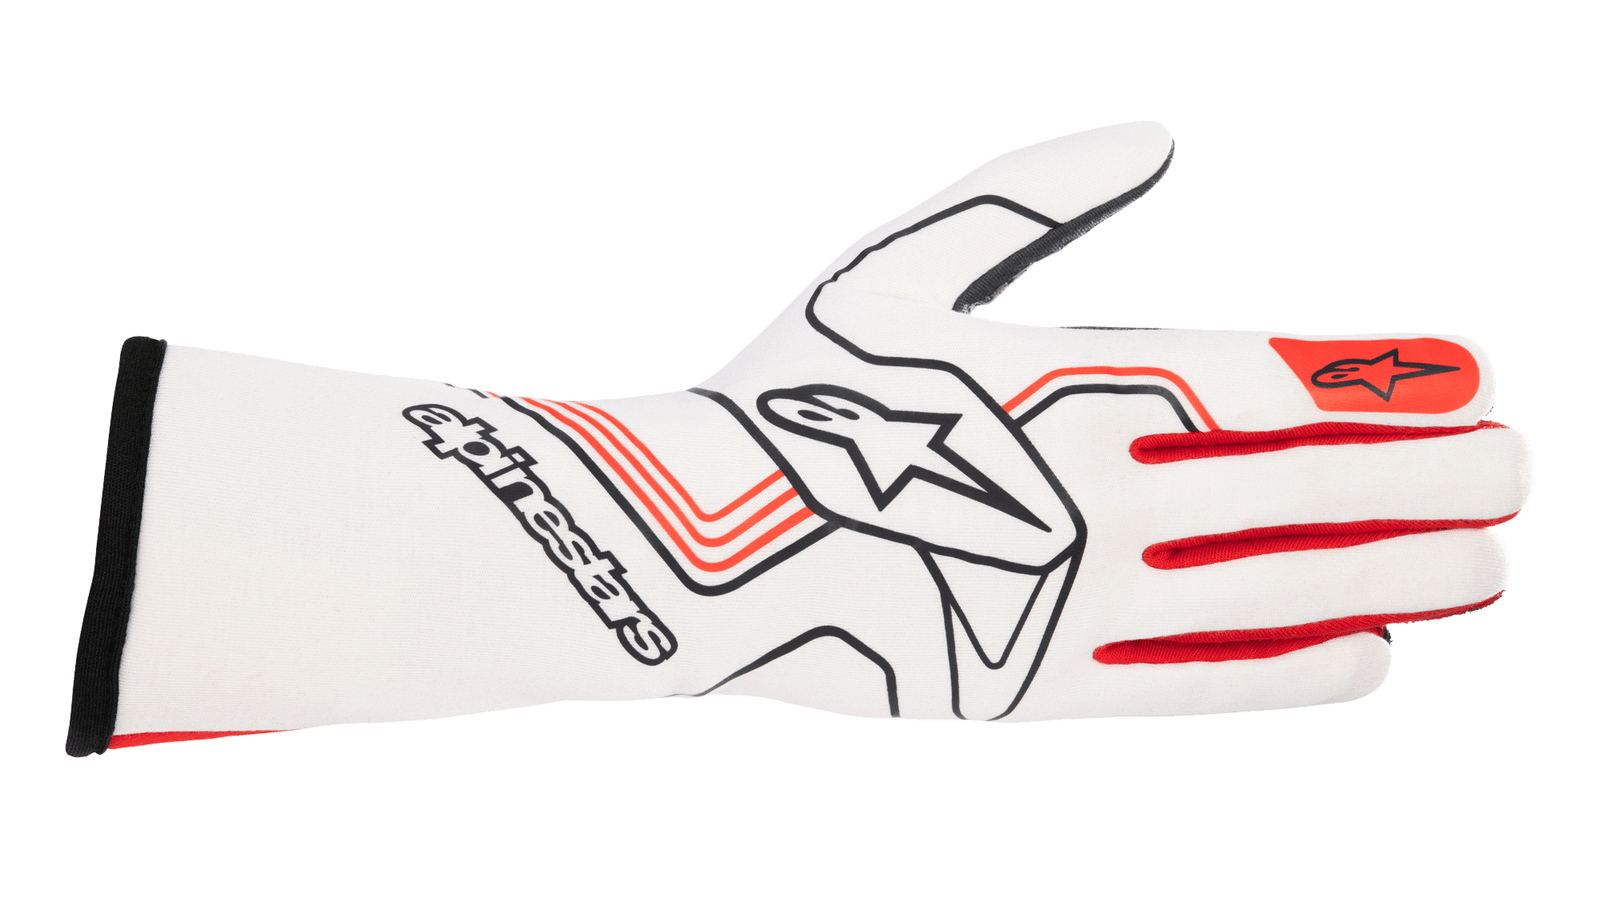 Tech-1 Race V3 Gloves